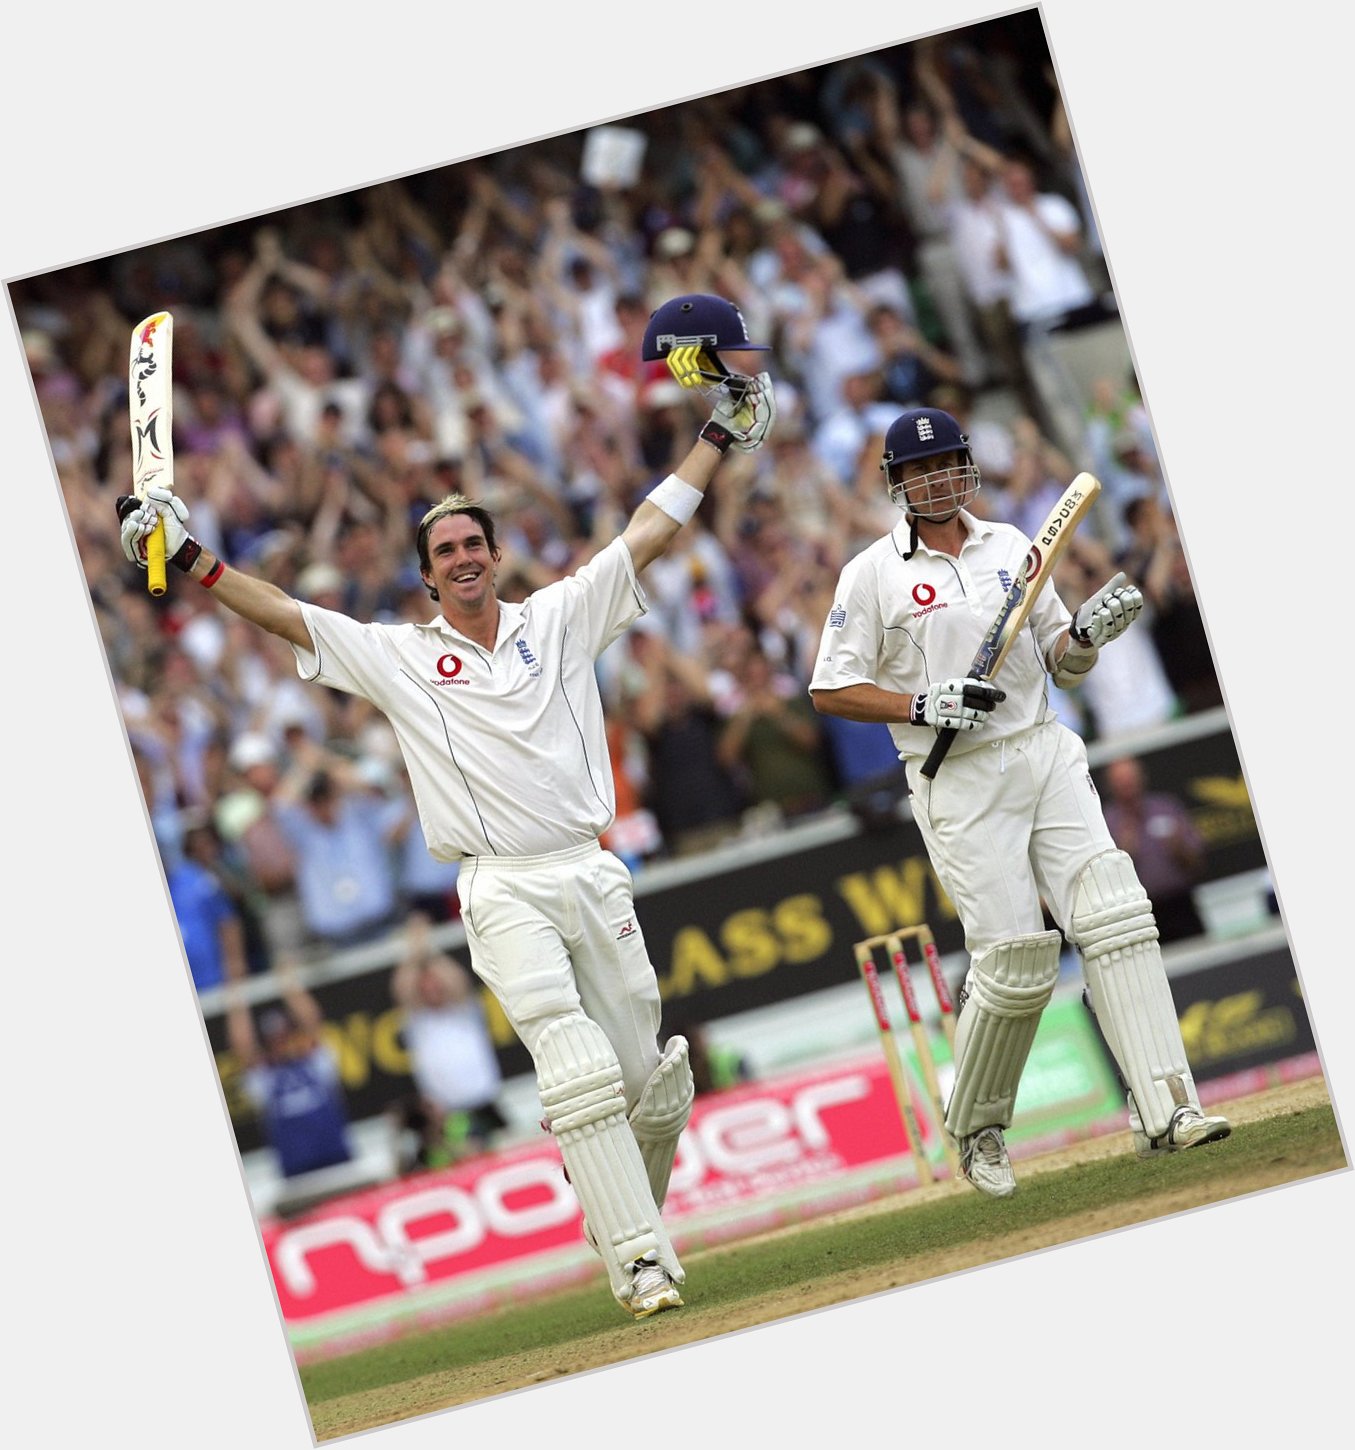  A very happy 40th birthday to Kevin Pietersen. England\s best-ever batsman?

